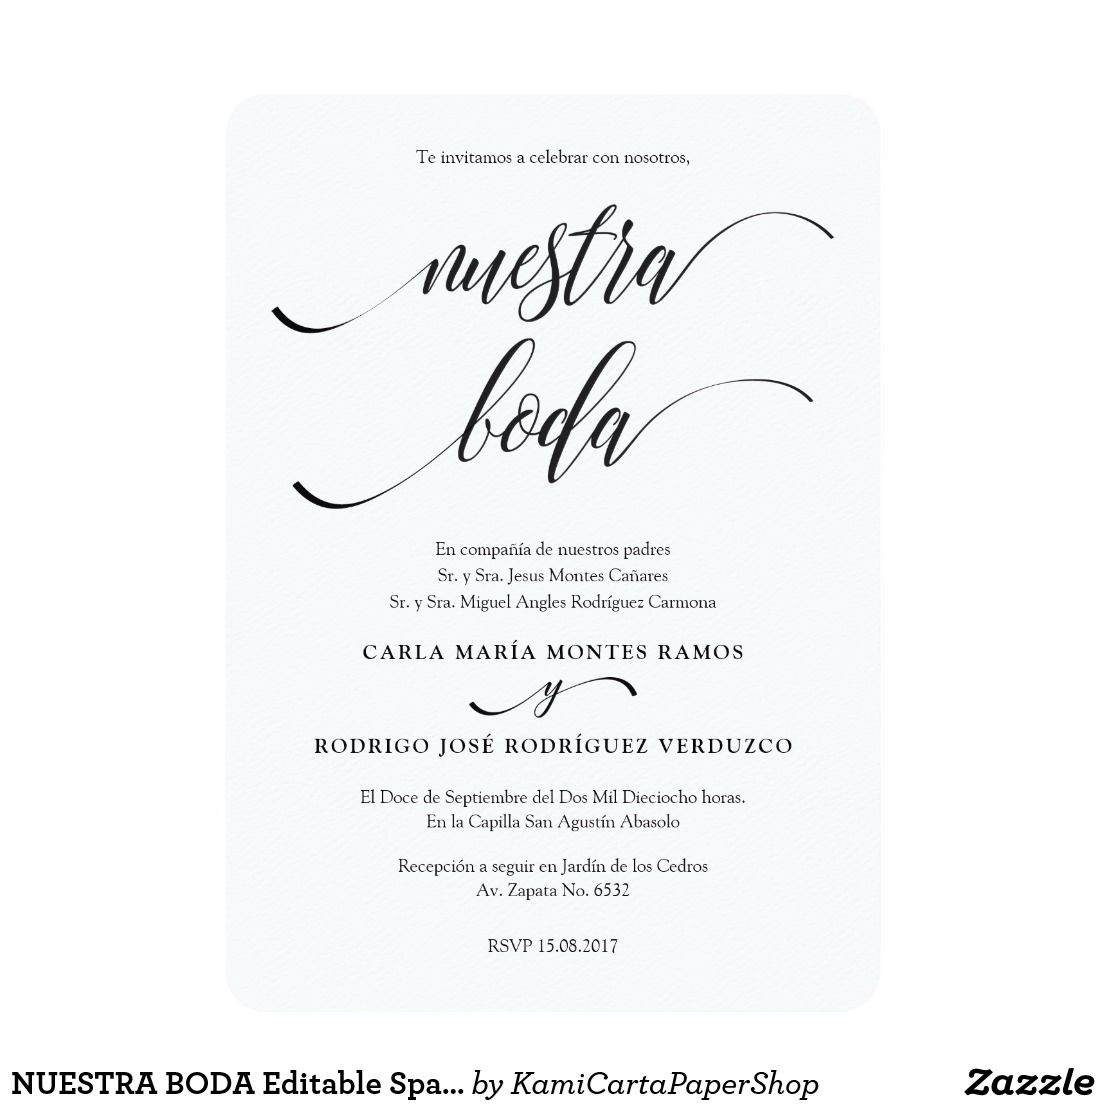 Spanish Wedding Invitations Nuestra Boda Editable Spanish Wedding Invitation In 2019 Pdf Print